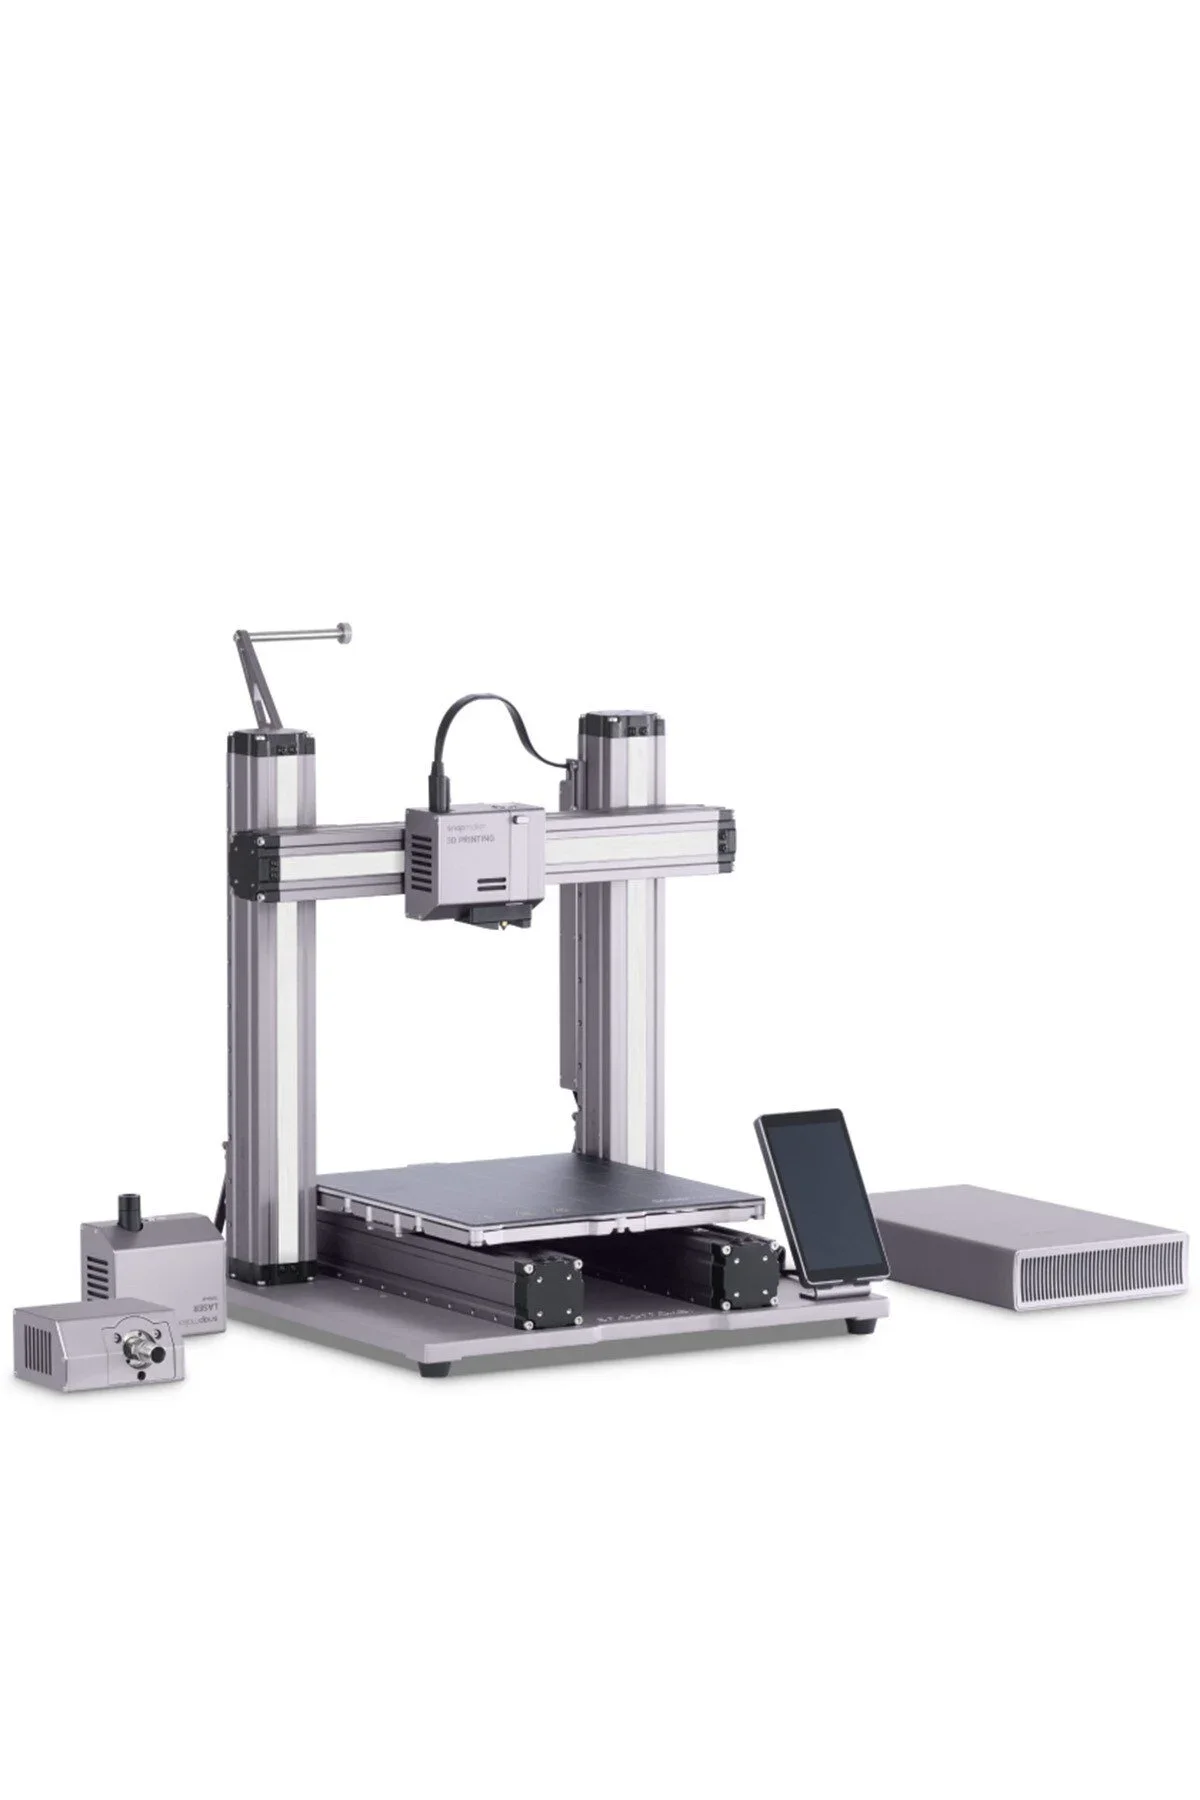 Snapmaker 2.0 Modular 3in1 3D Printer - A250T